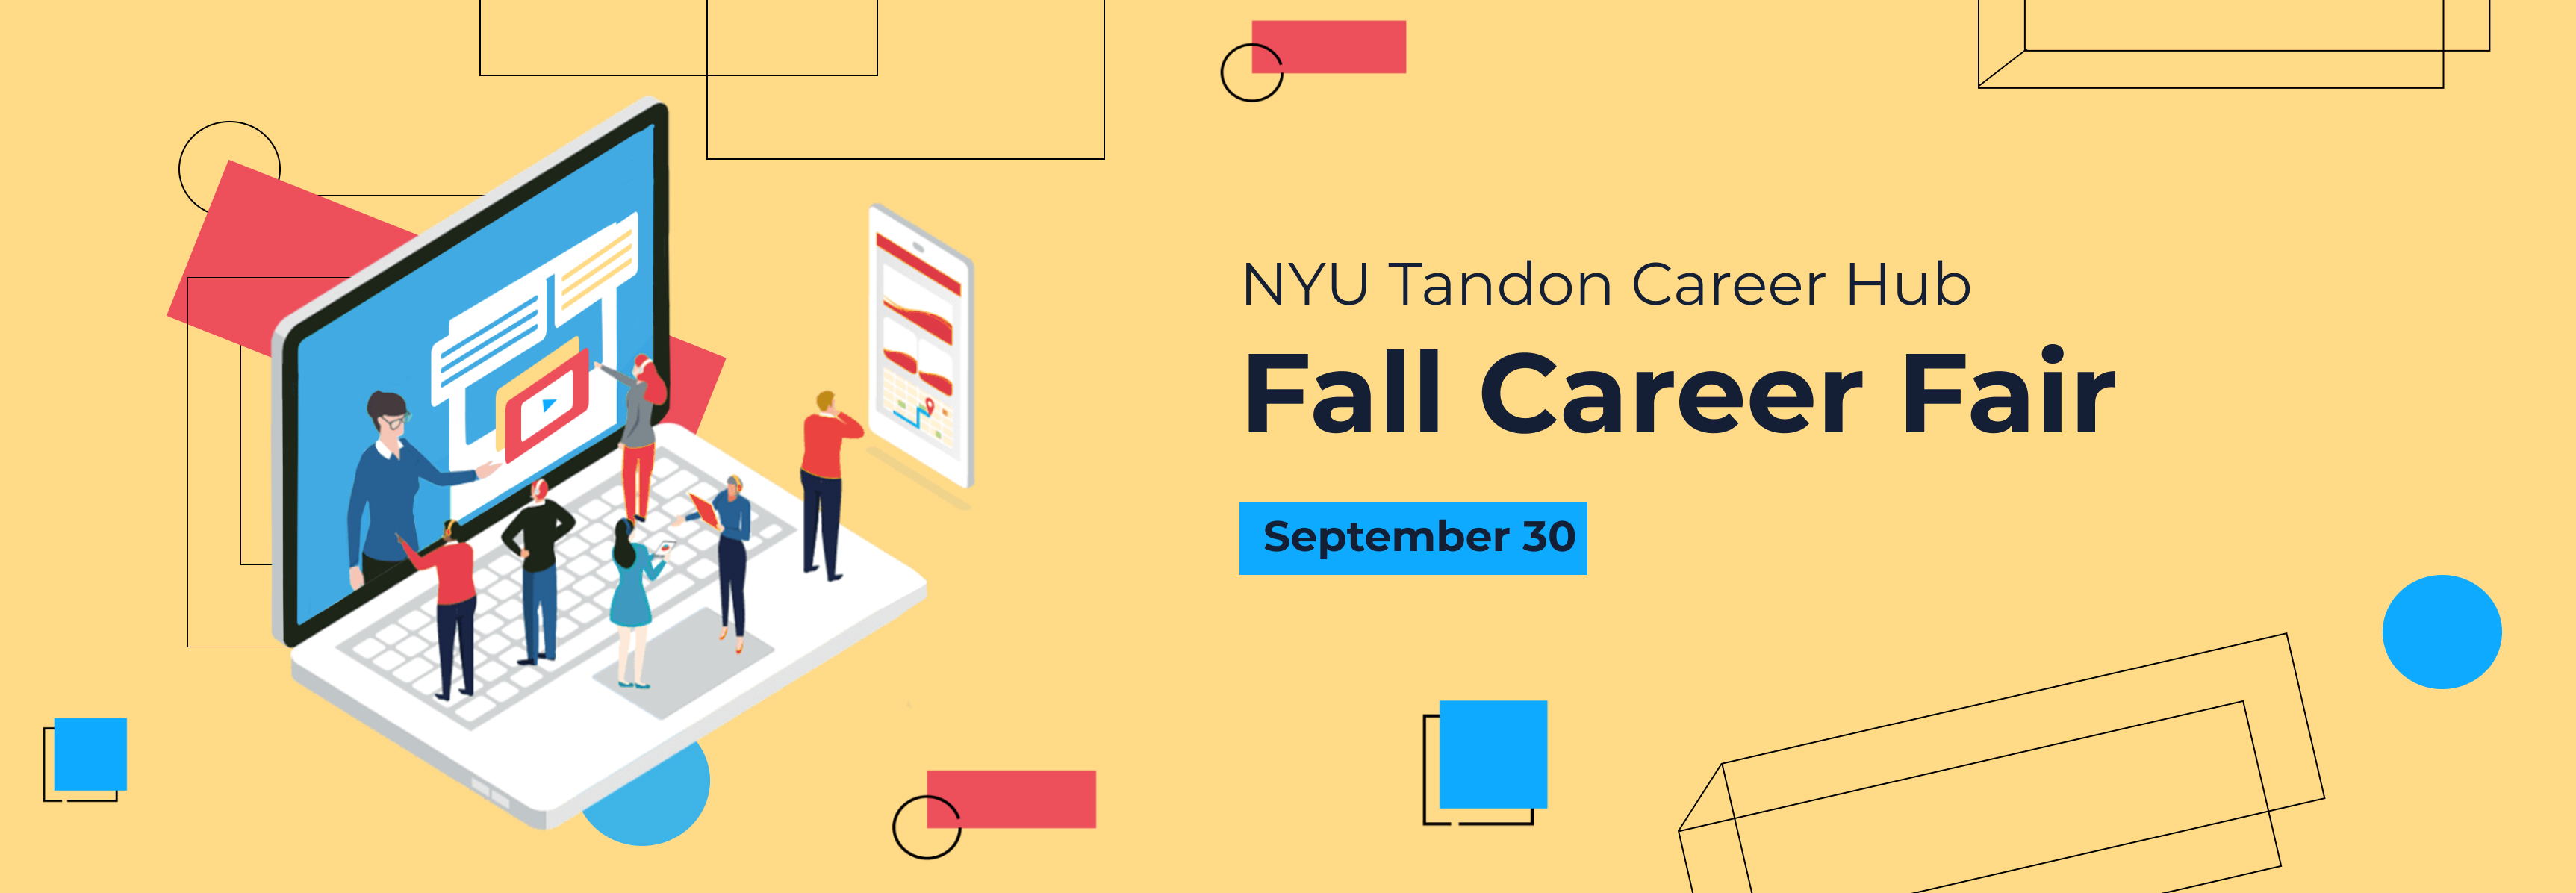 Fall Career Fair - Sept 30